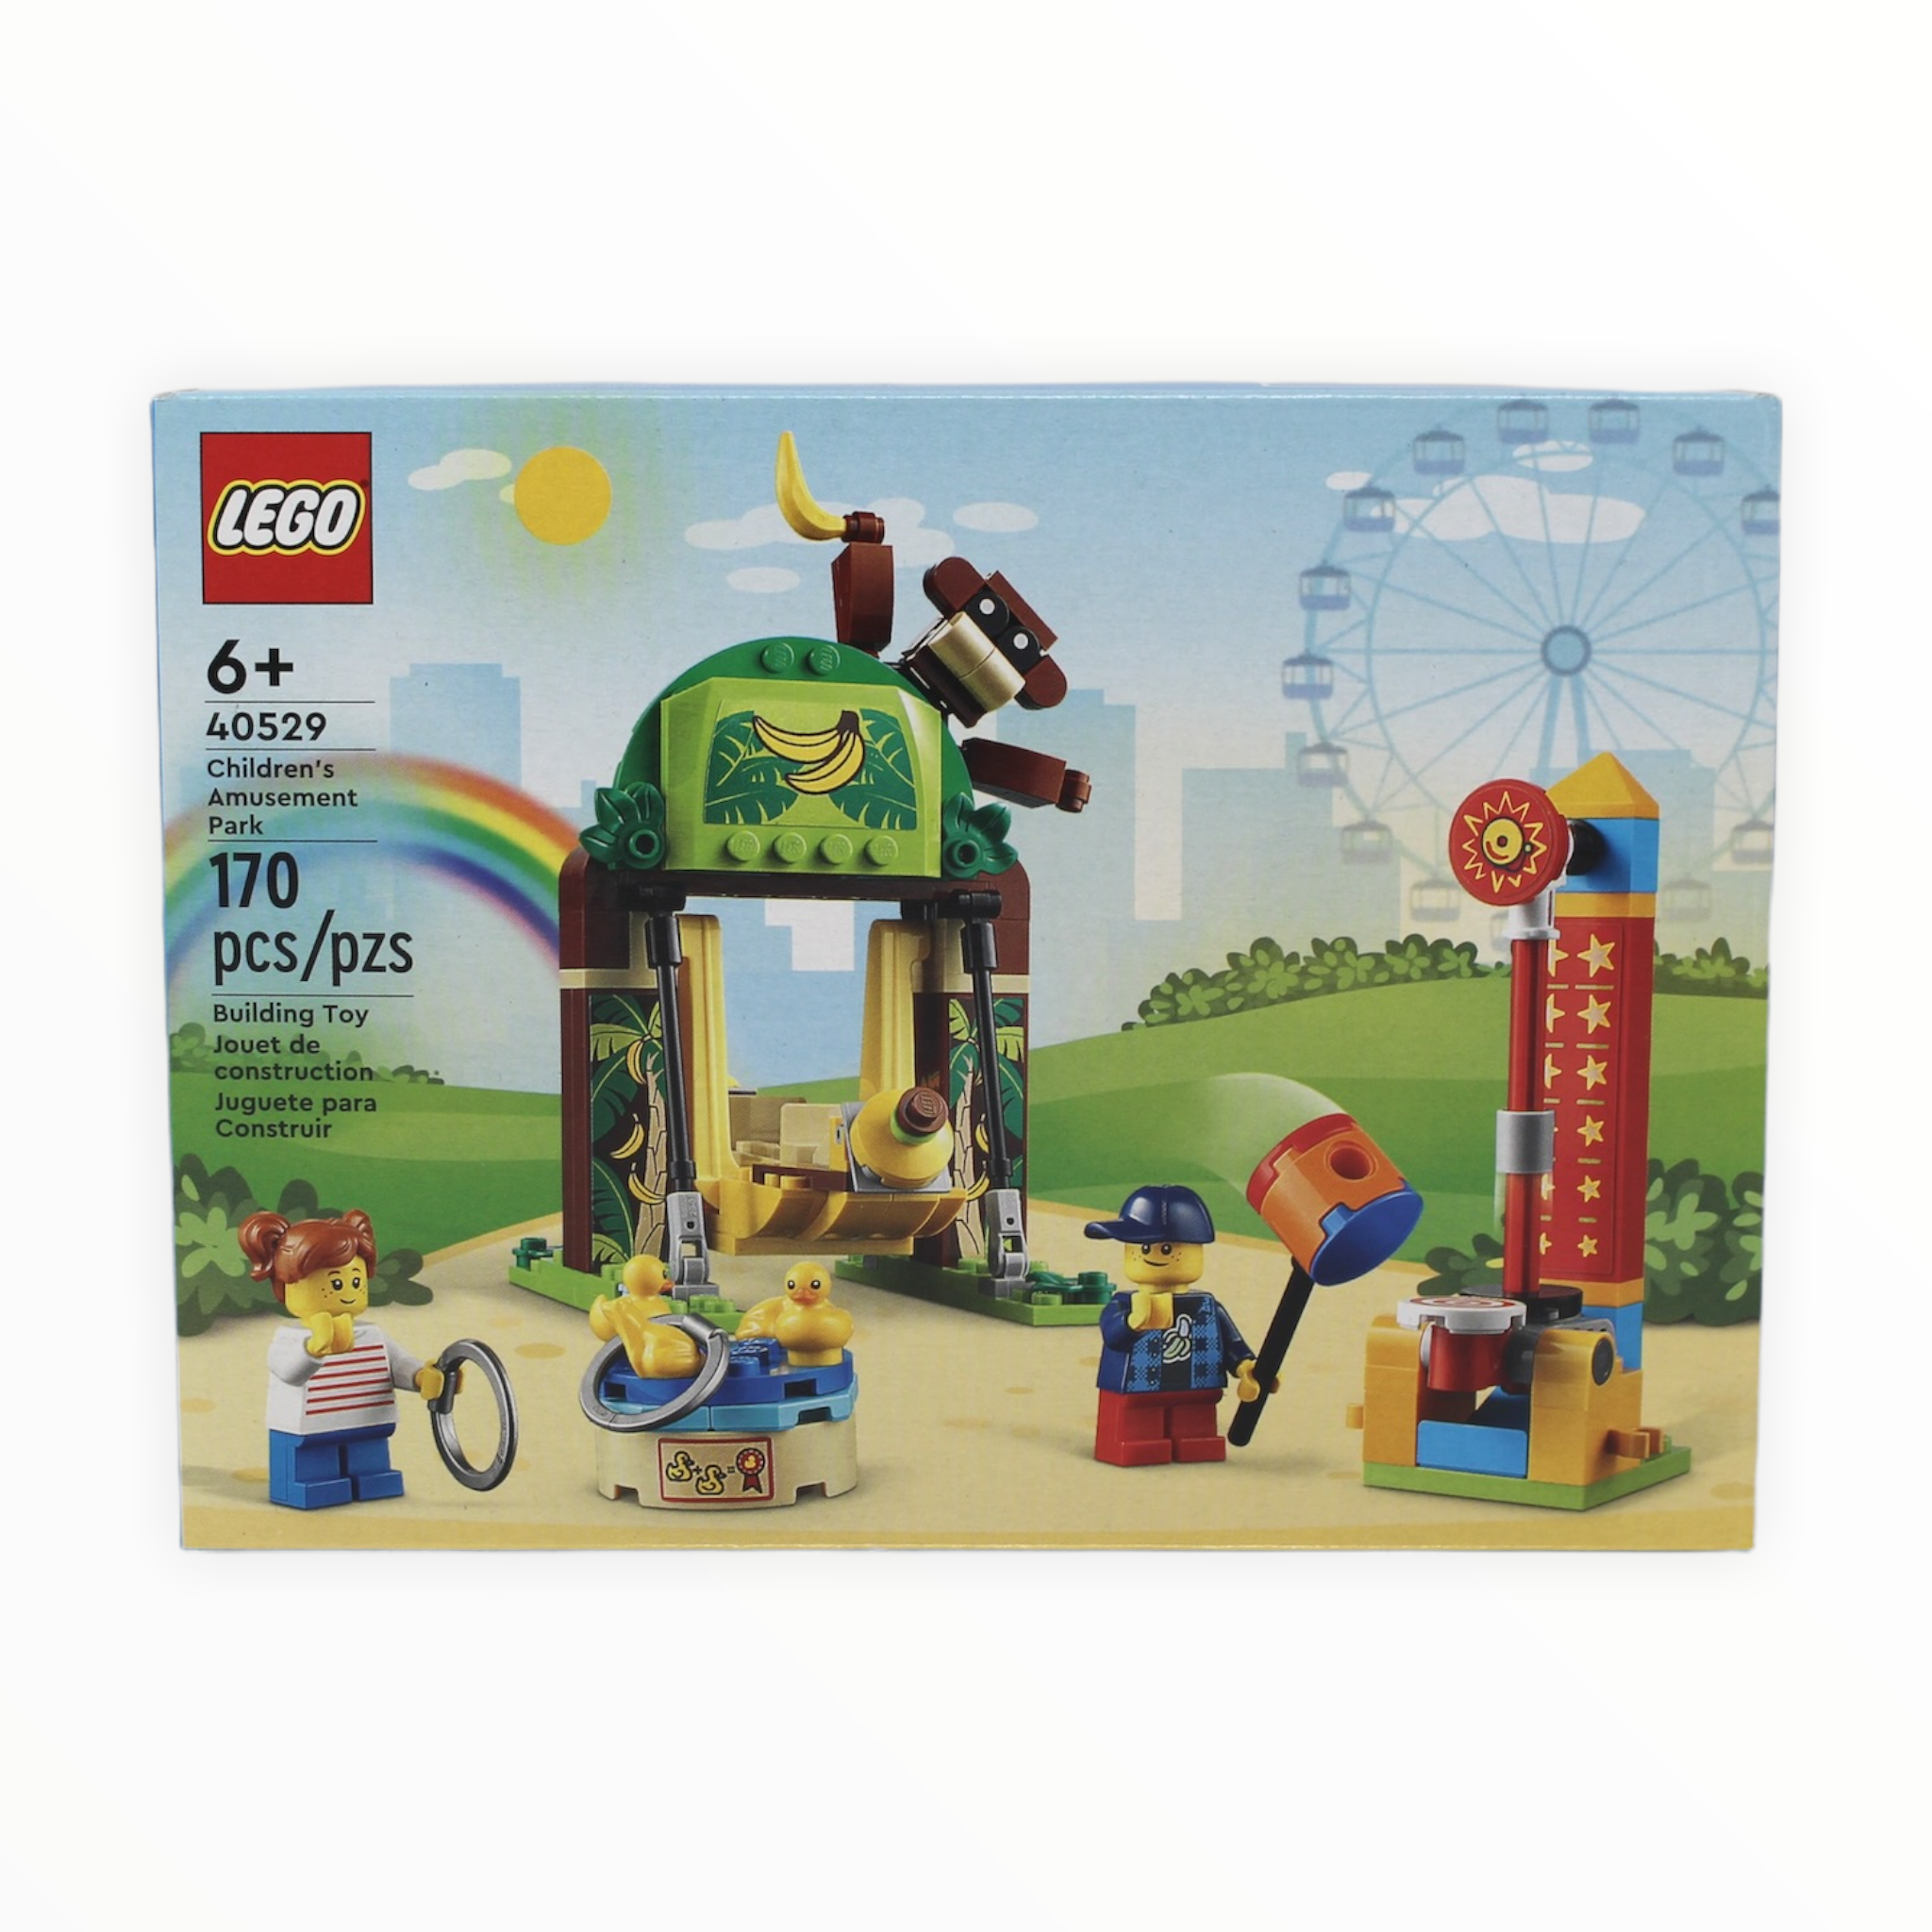 Retired Set 40529 LEGO Children’s Amusement Park